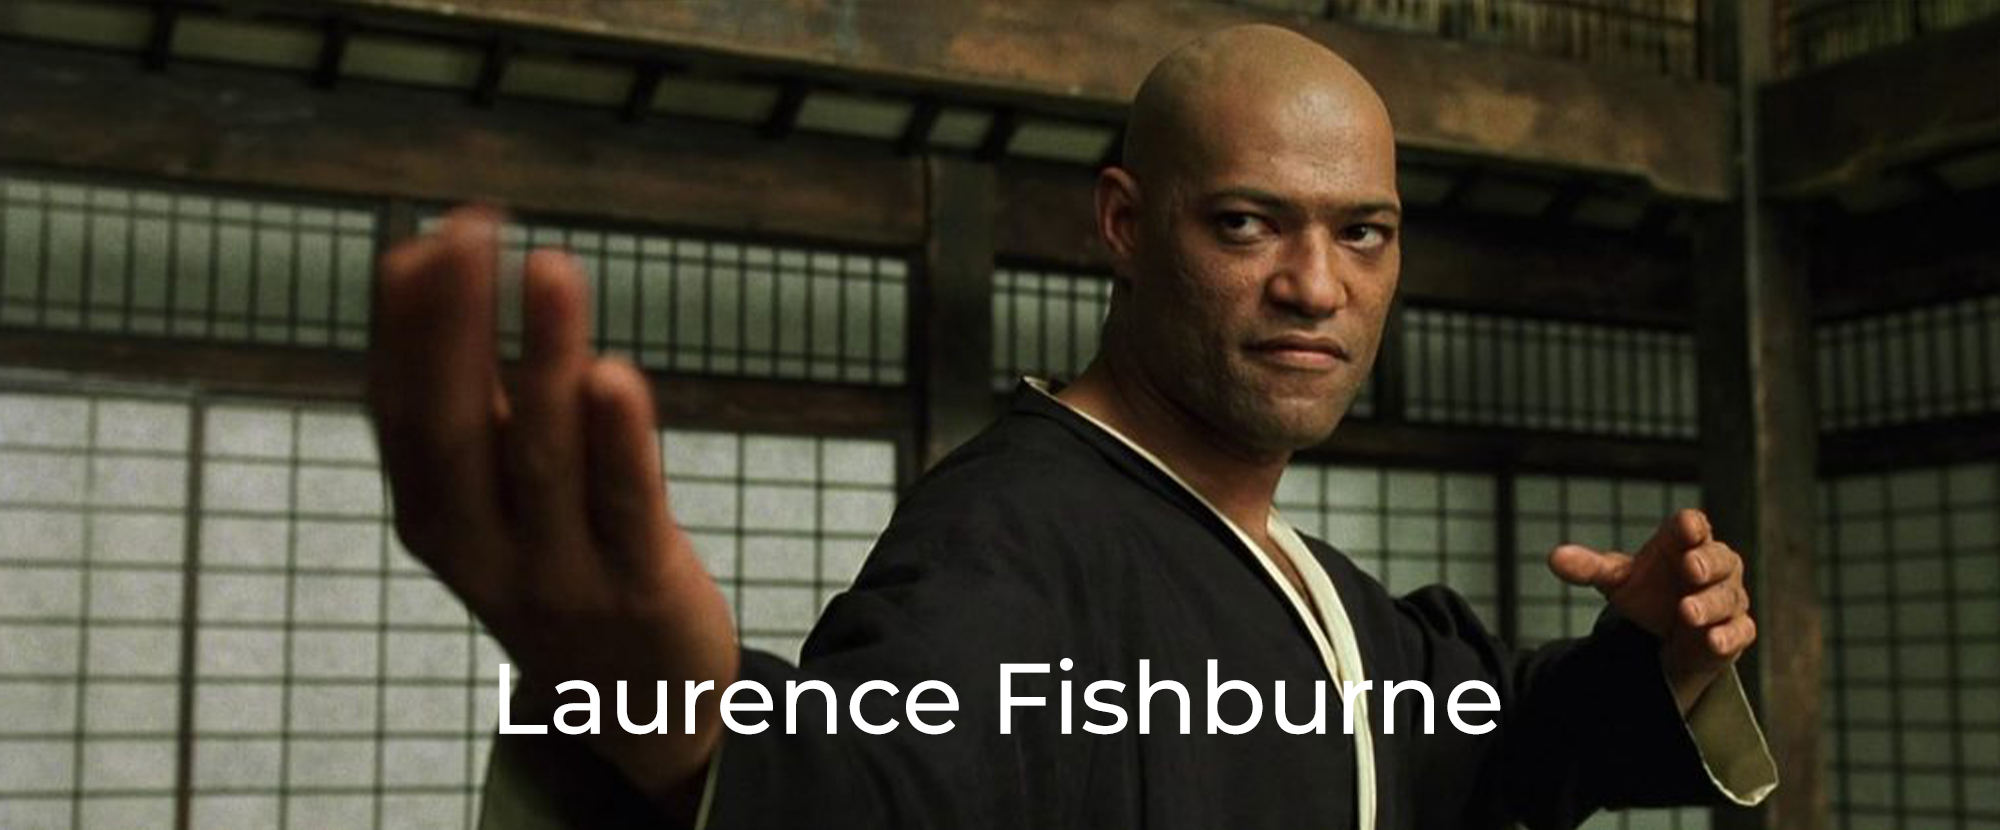 Laurence-Fishburne-The-Matrix-Header